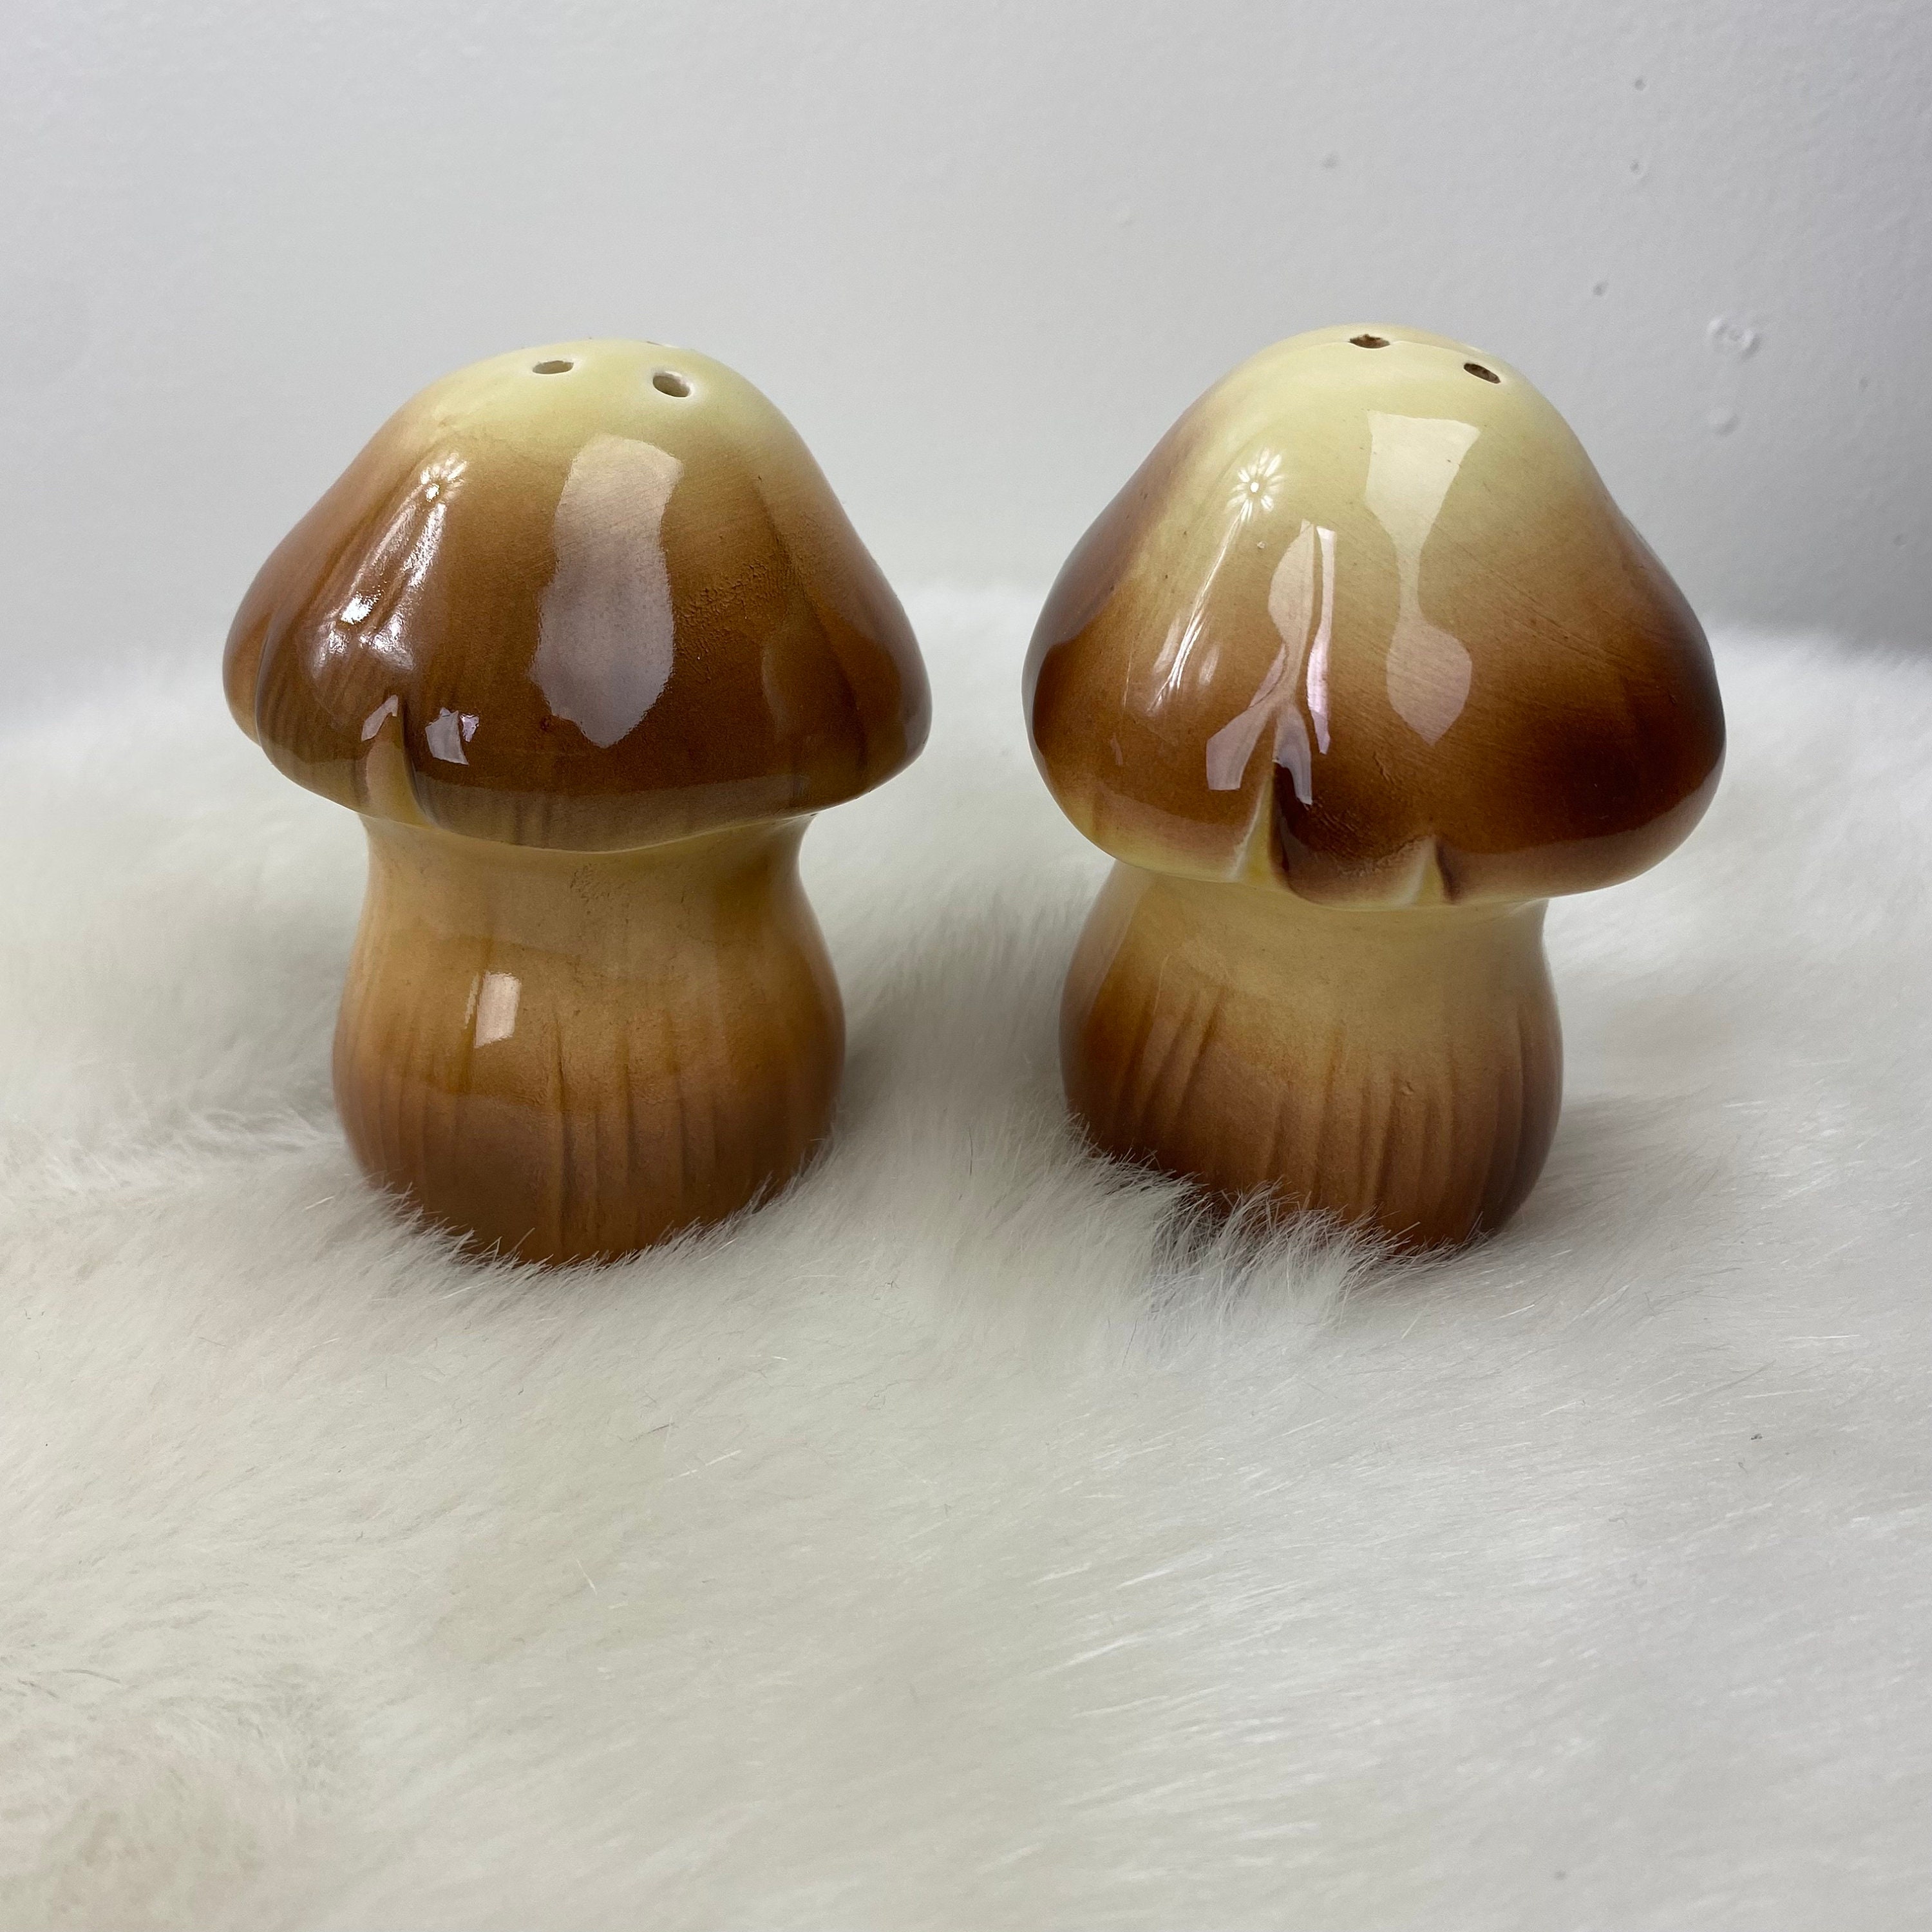 1-UP Mushroom Herb Grinder – GHG